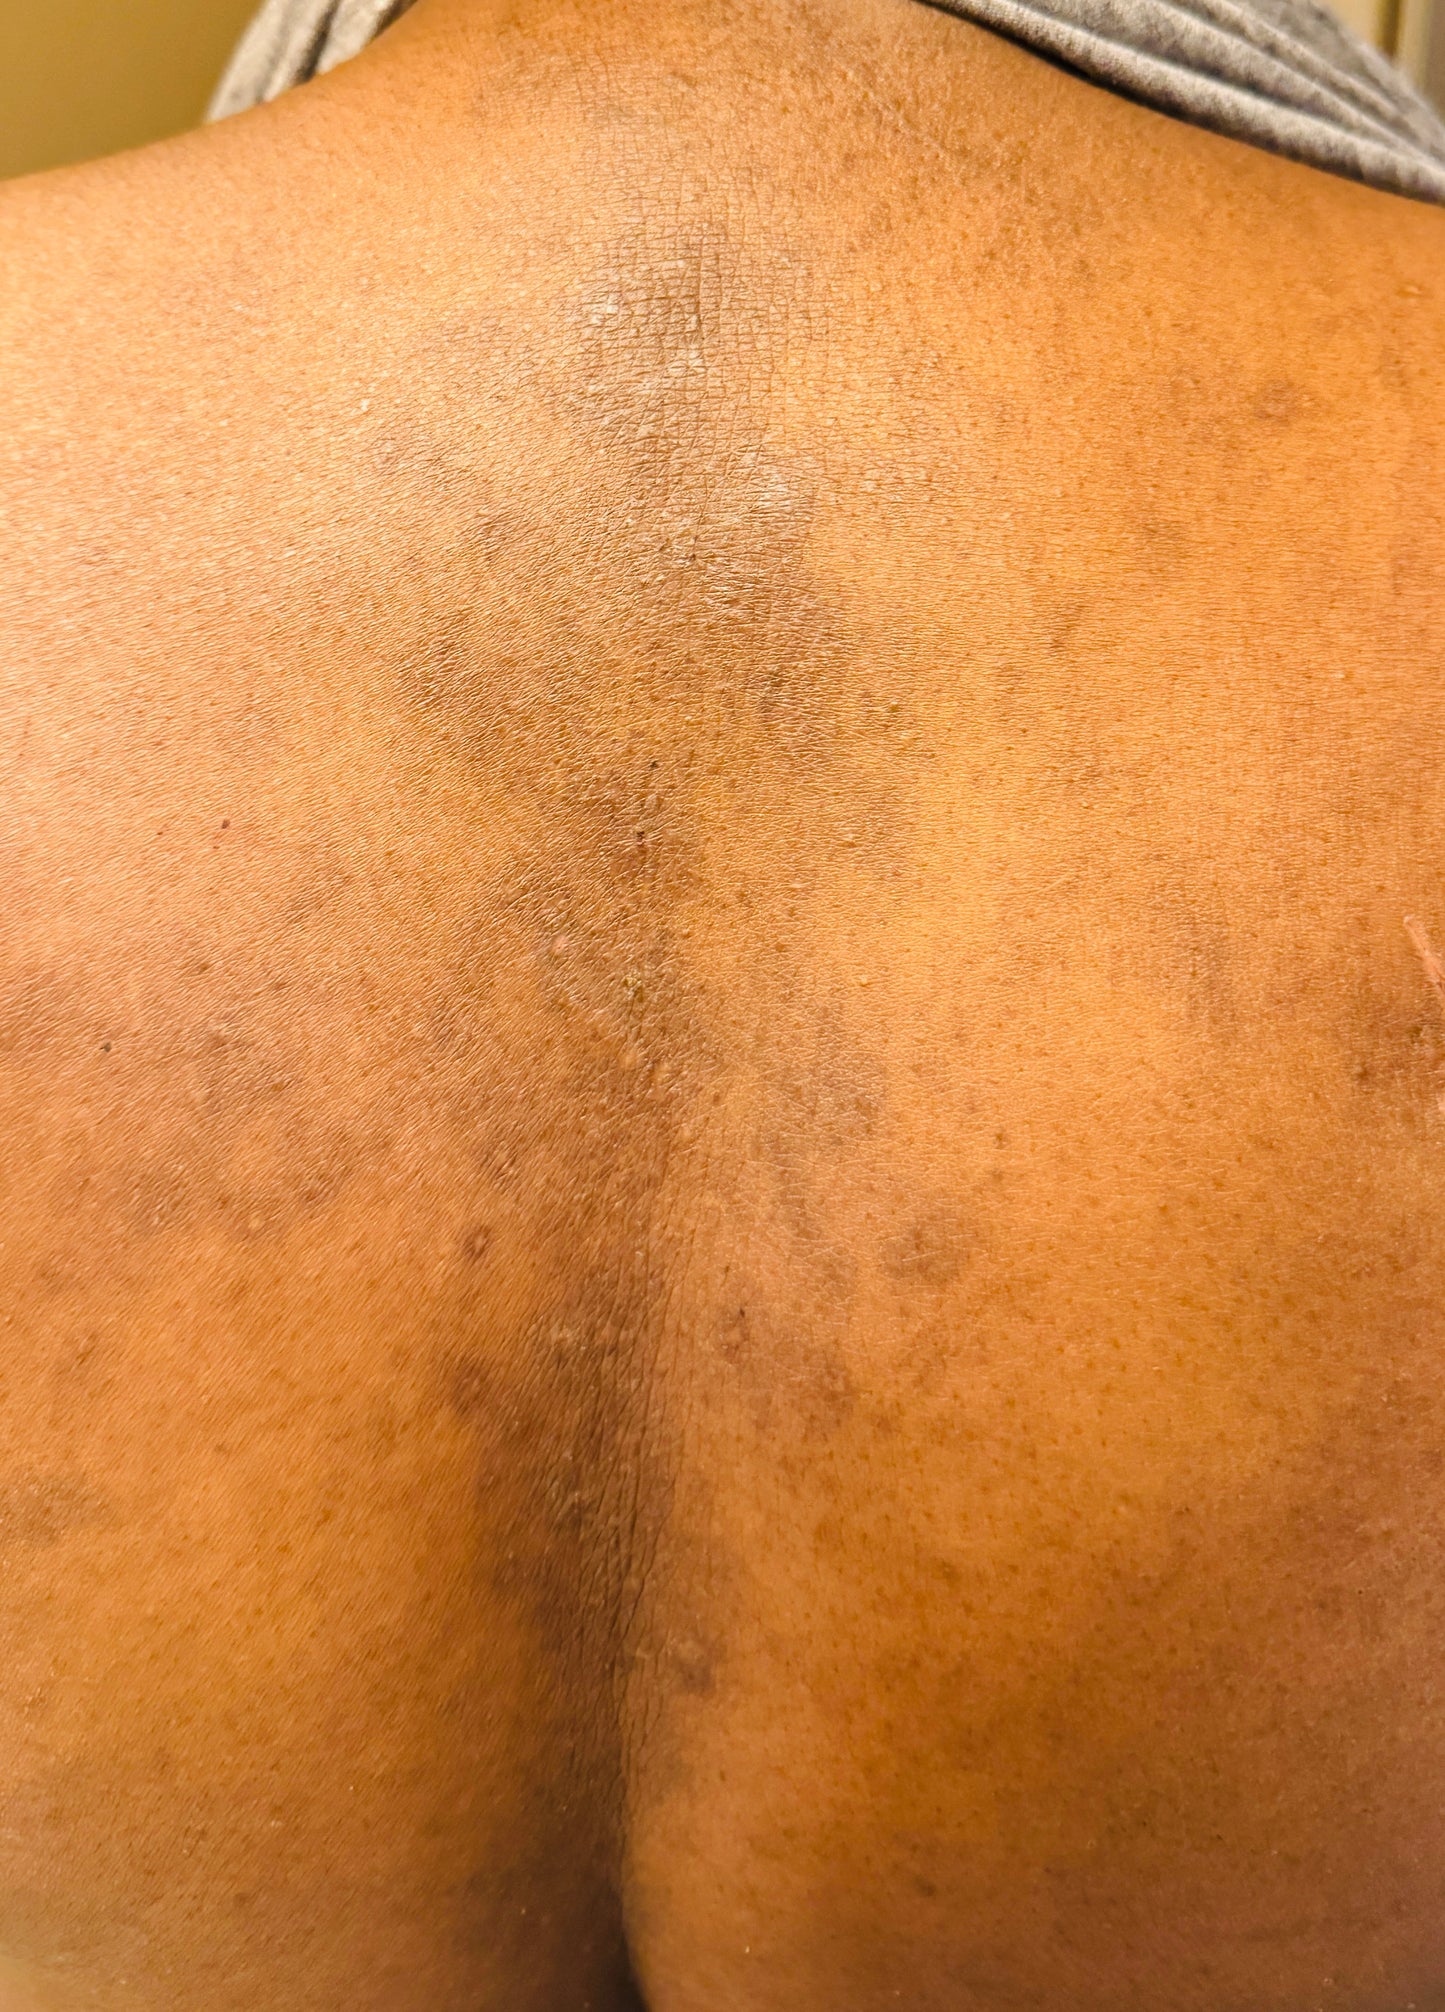 Eczema Healing Balm - Powered by Sulfur